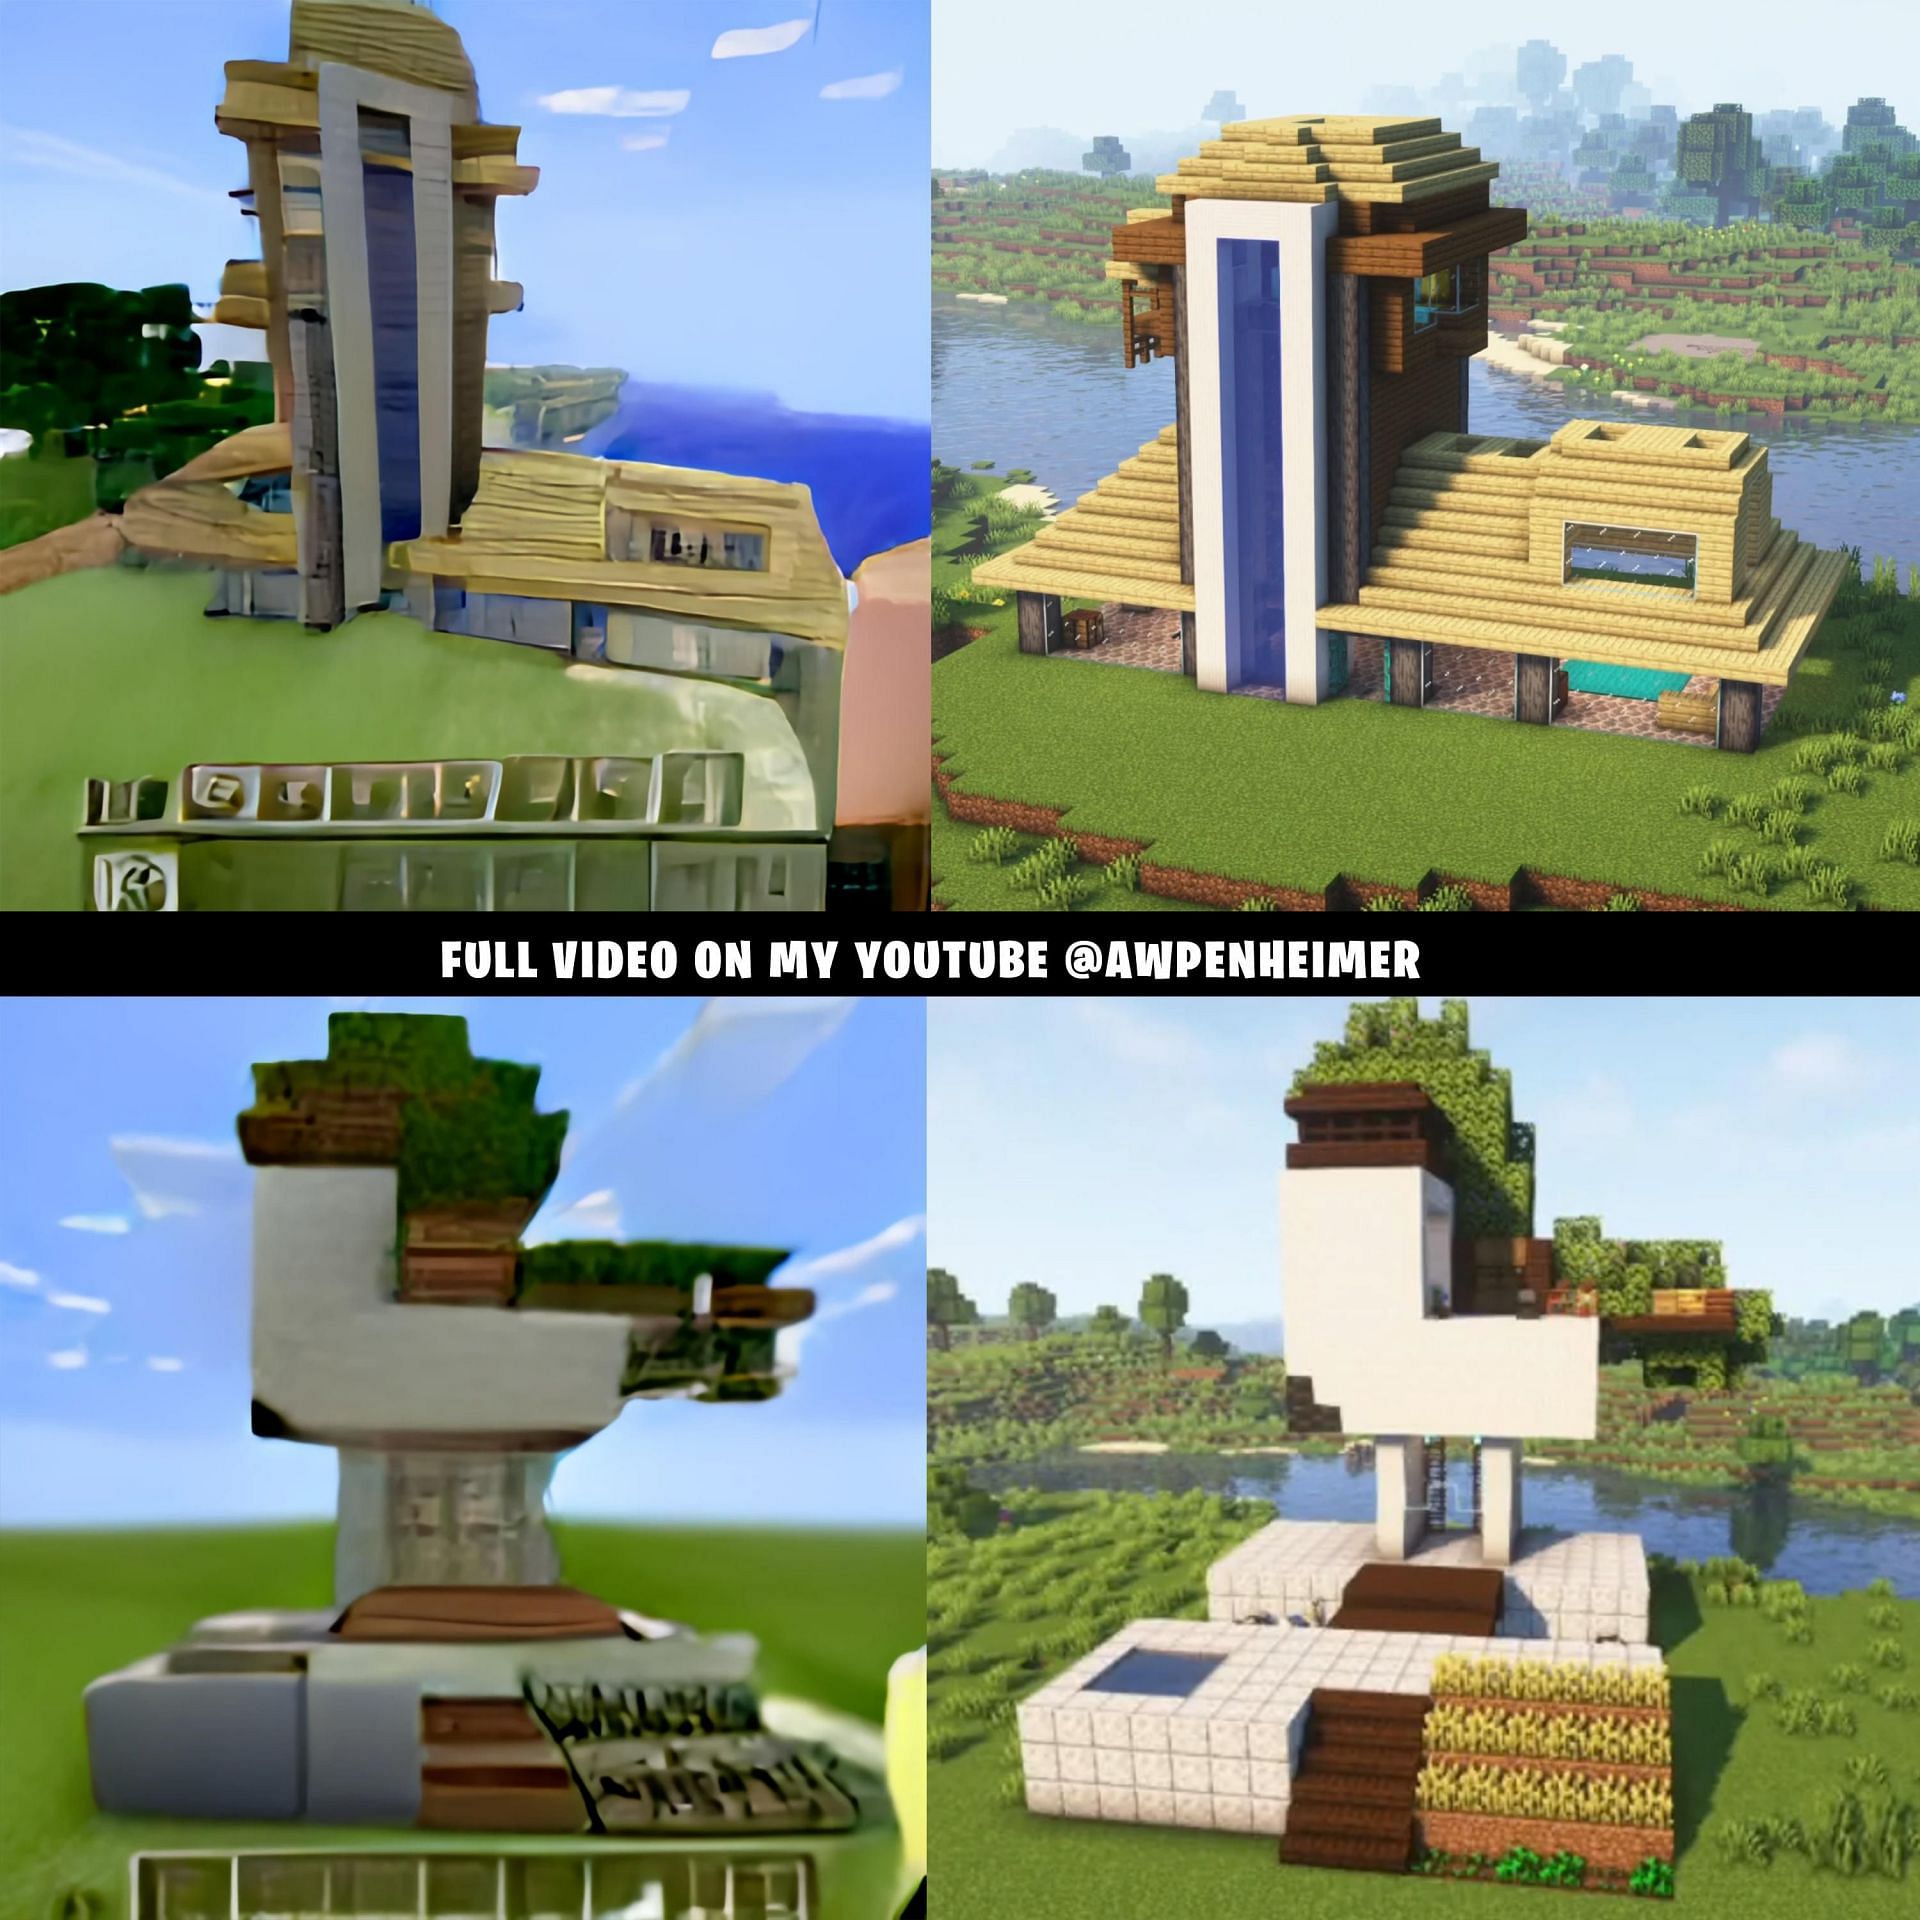 The AI recreations from Minecraft (Image via u/Awpenheimerr on Reddit)